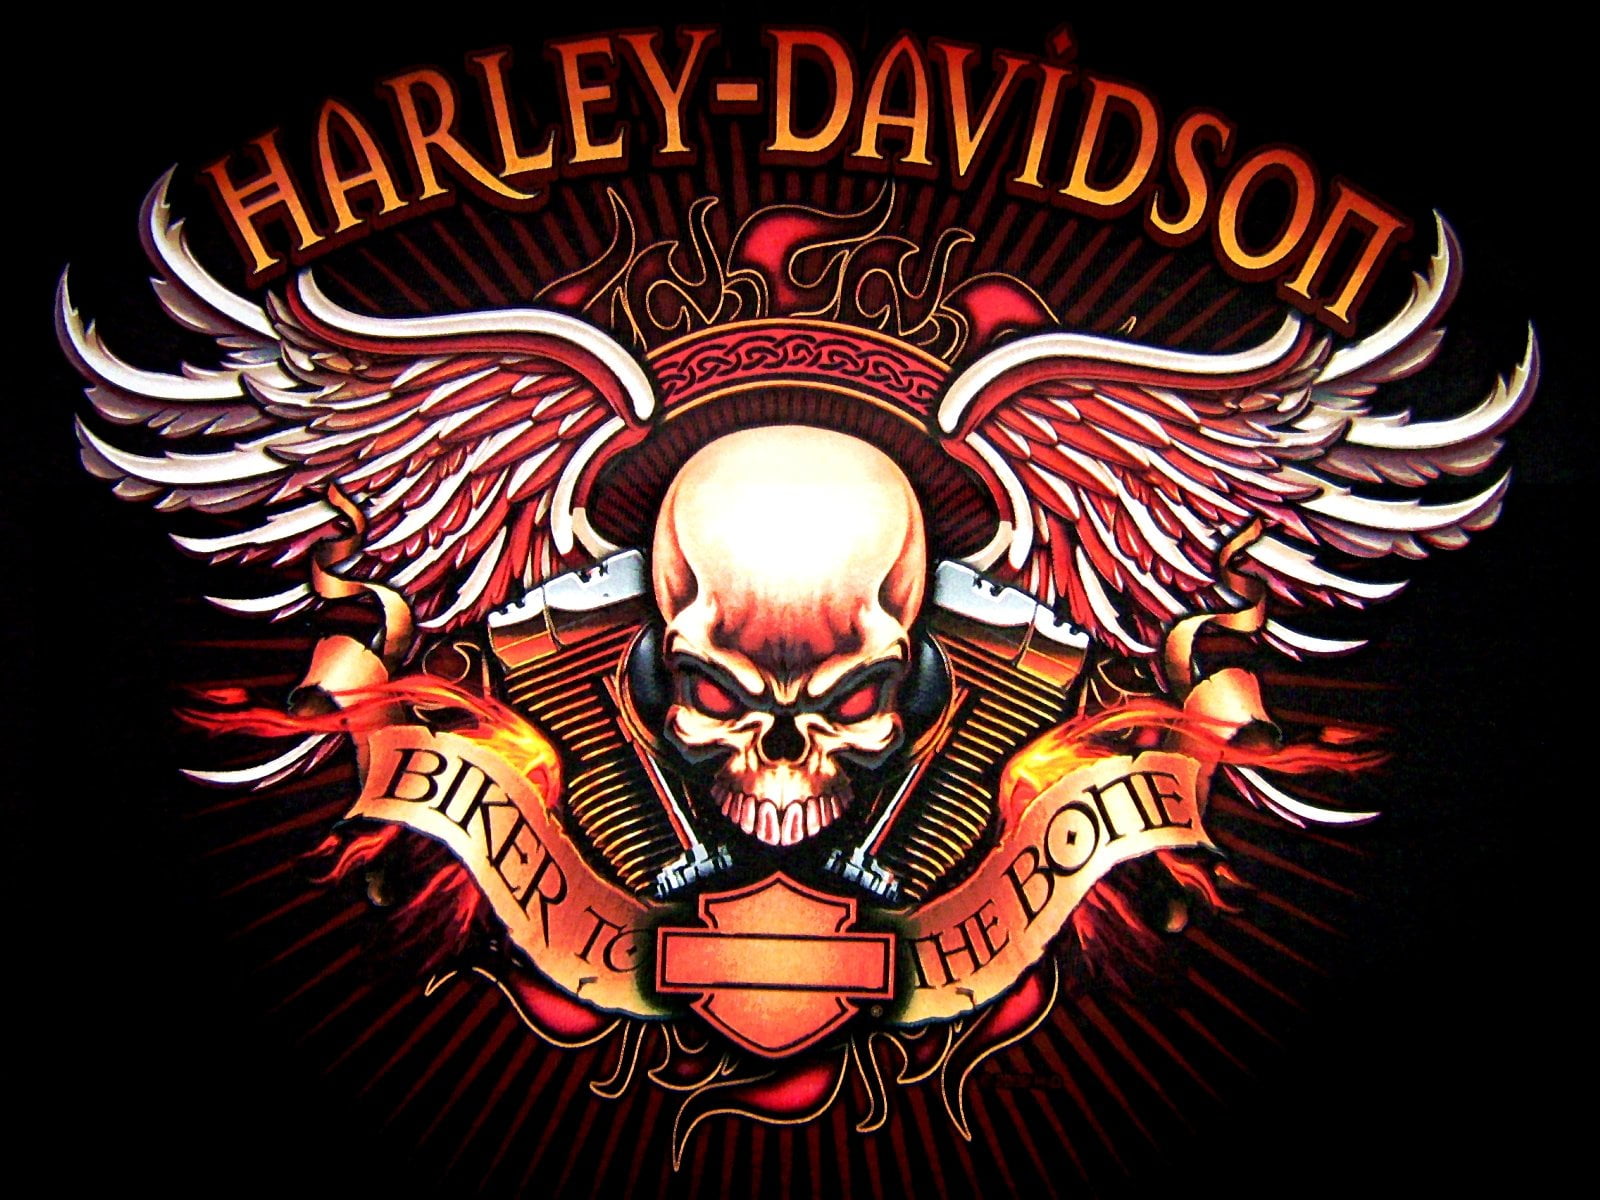 Harley-Davidson logo, Motorcycles, decoration, backgrounds, illustration